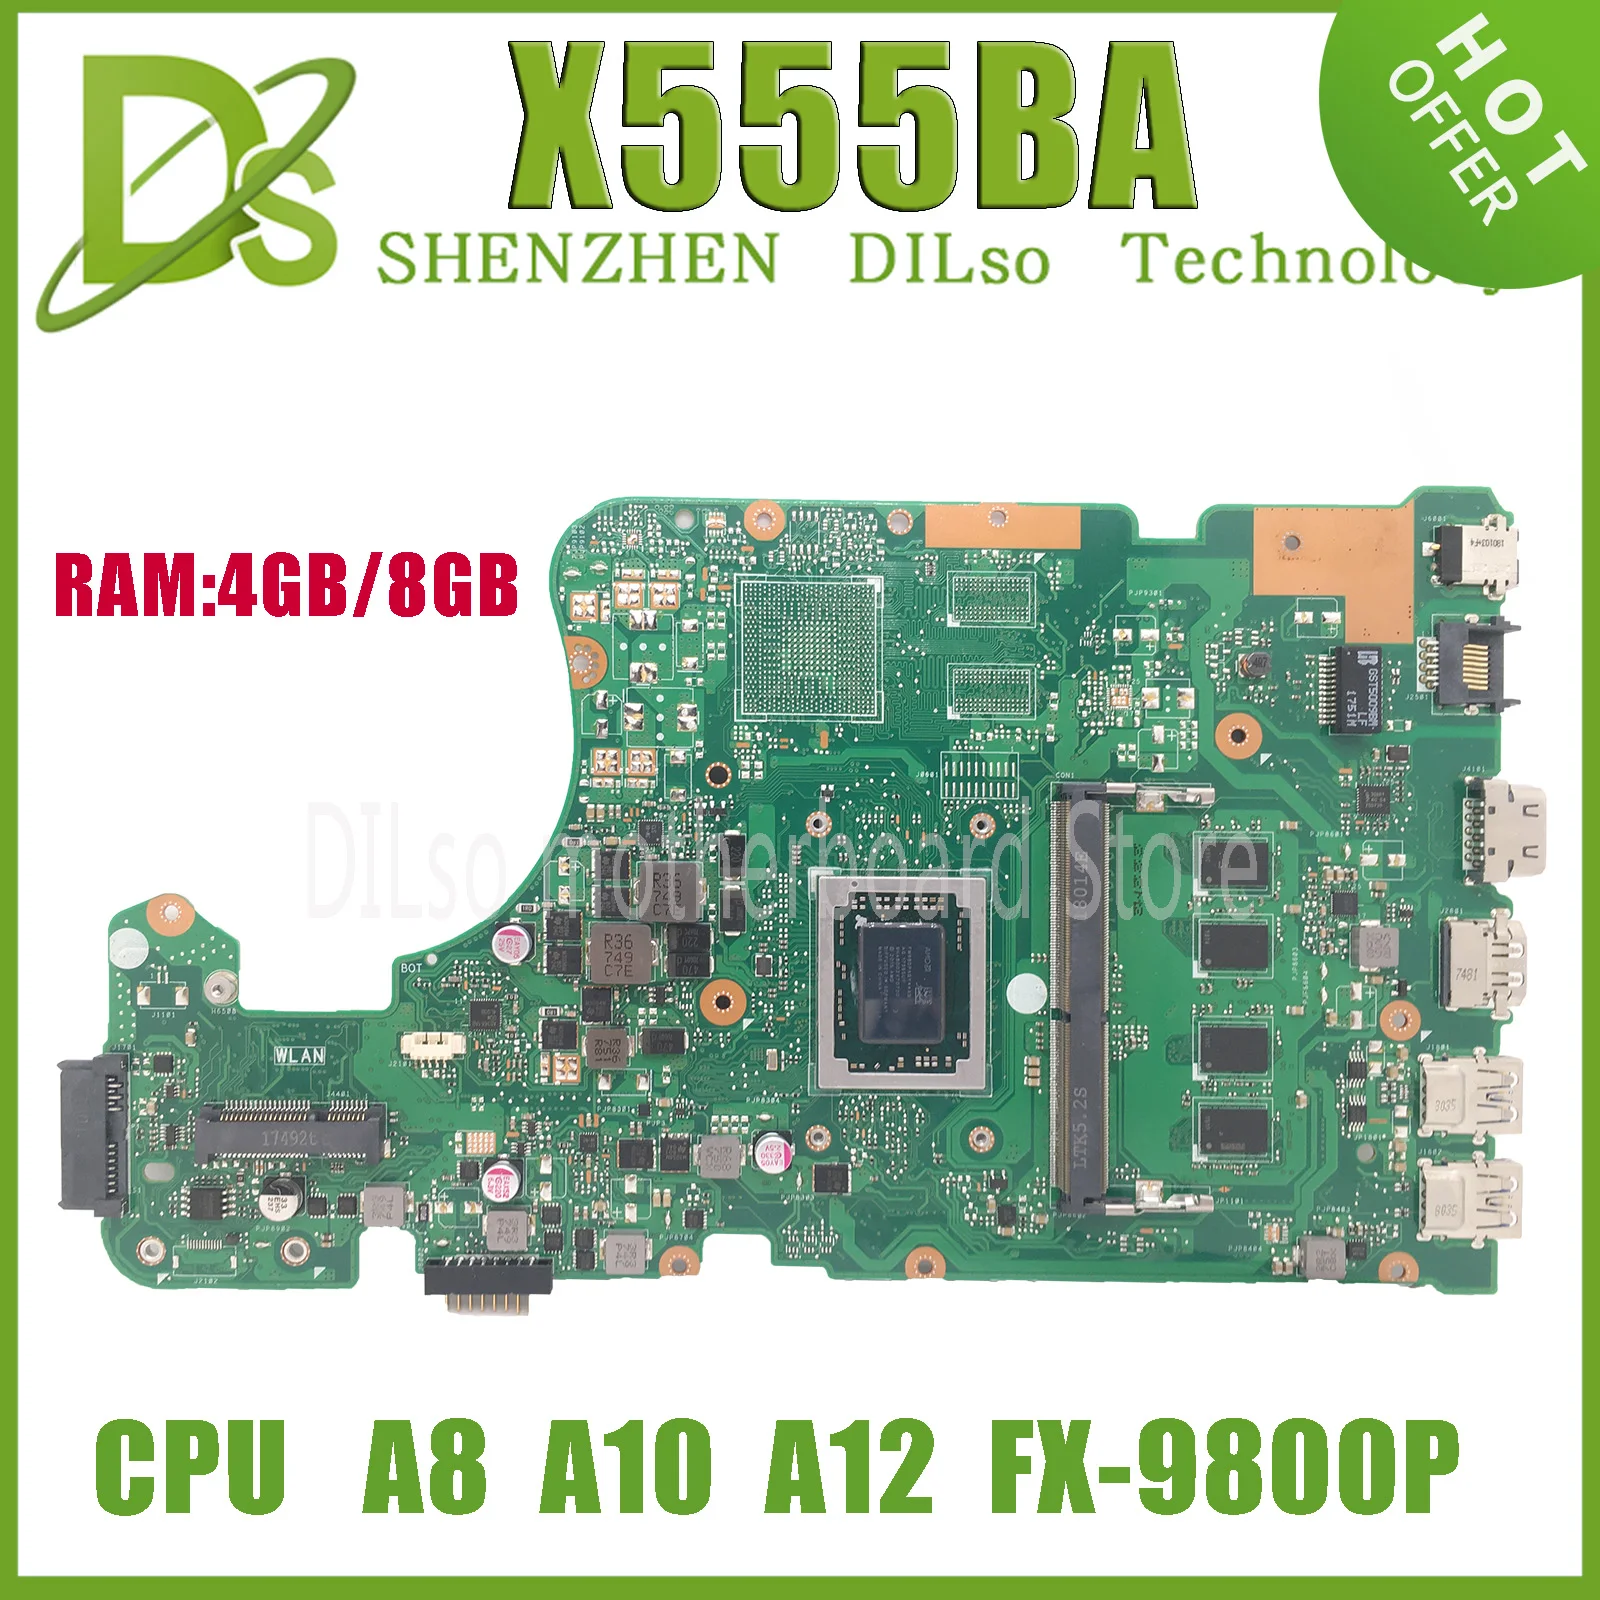 X555QG Laptop Motherboard For Asus X555QA X555Q X555B X555BP K555B X555BA Mainboard A6 A9 A10 A12 FX-9800P CPU 4G/8G-RAM